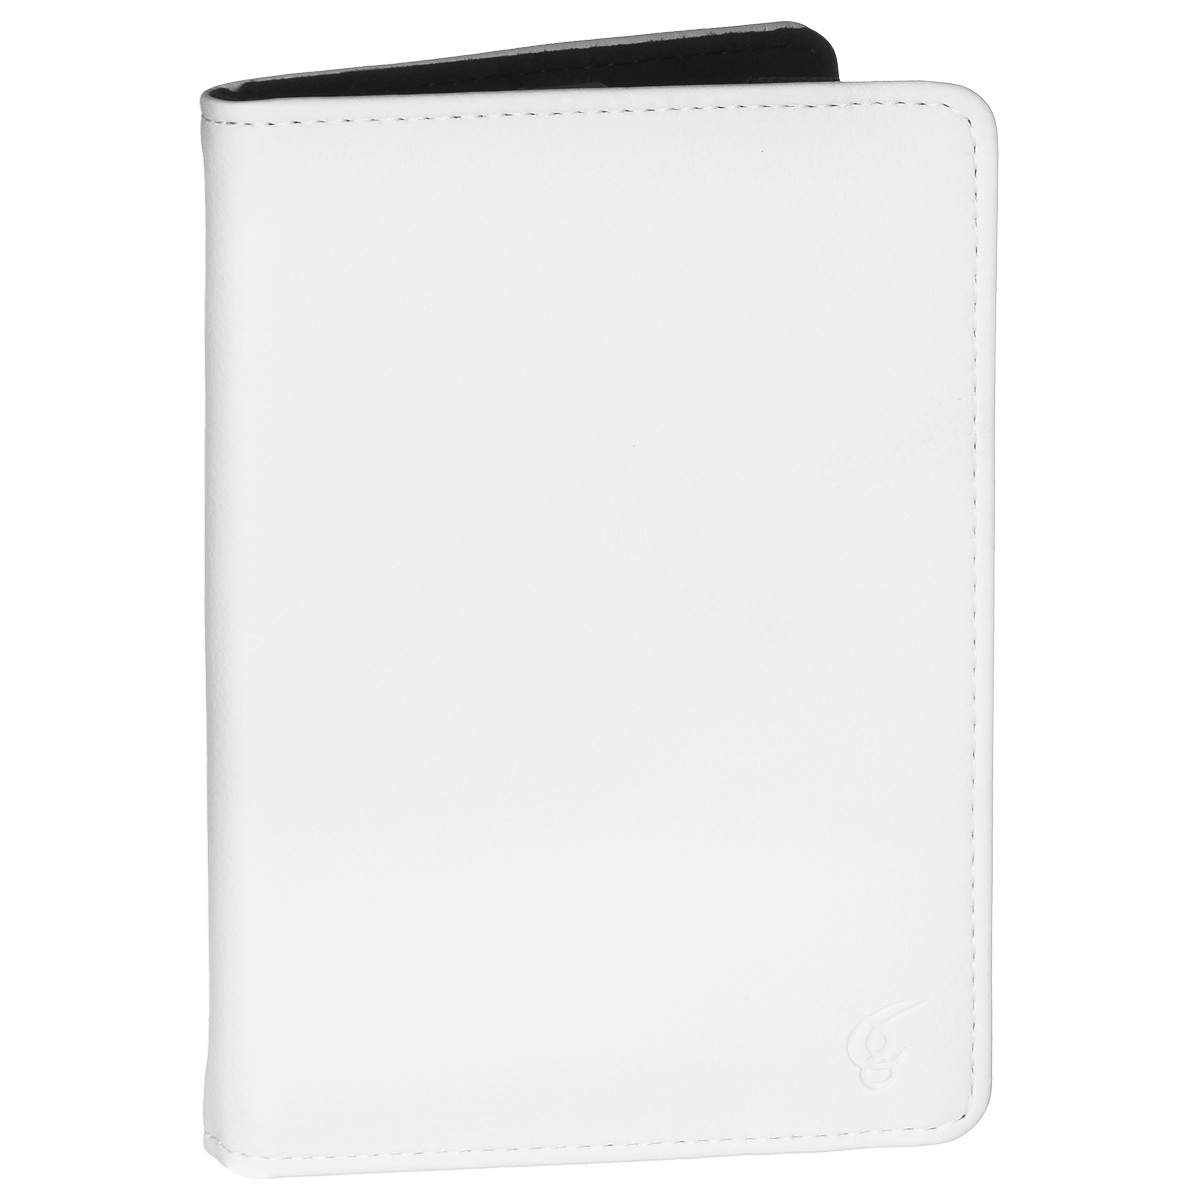 Vivacase кожаный чехол-обложка для PocketBook 641/640/631/626/625/624/623/622/615/614, White